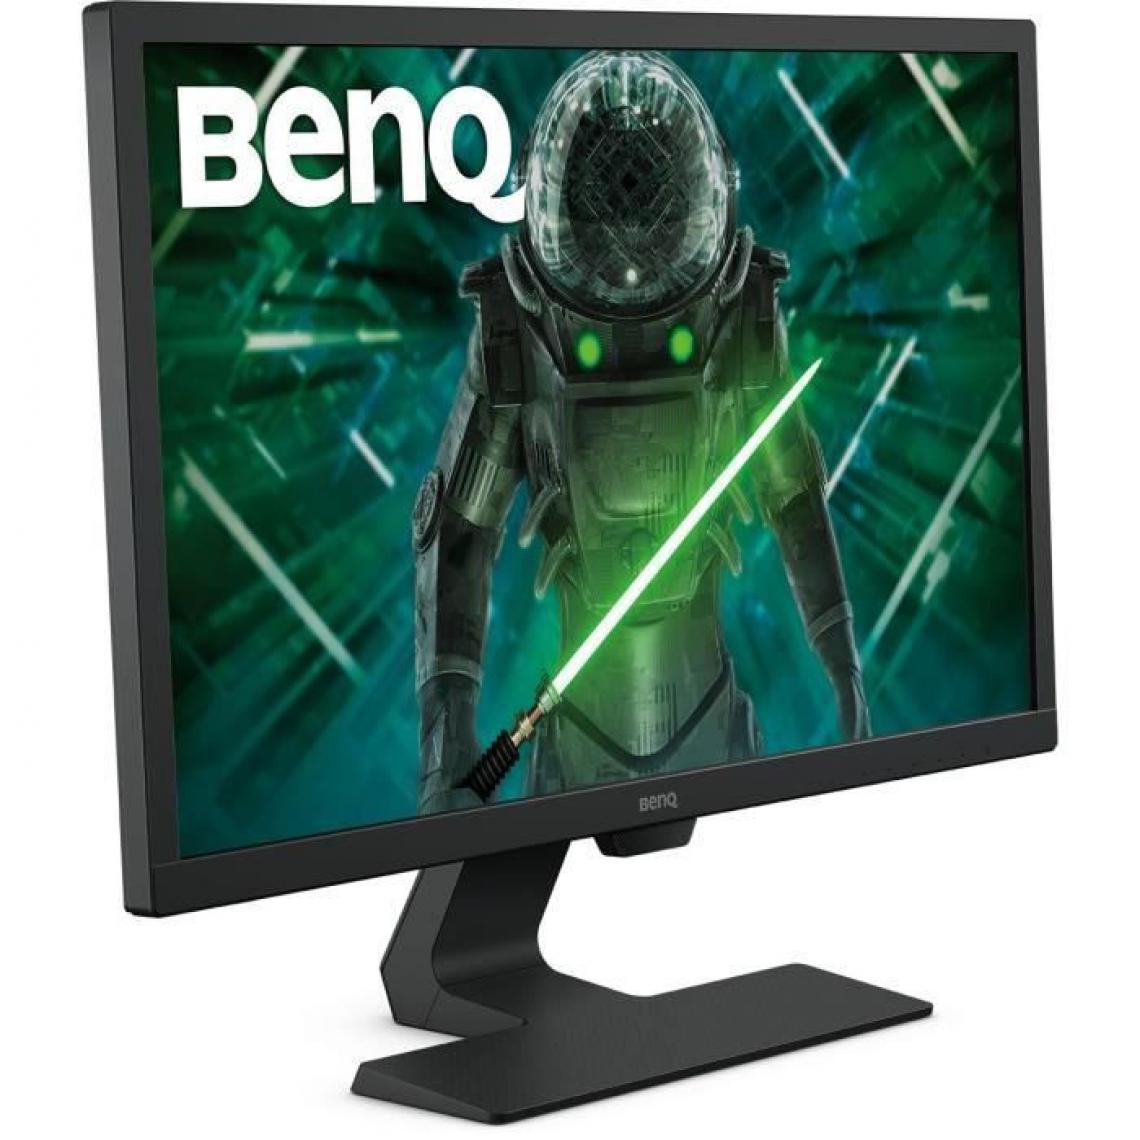 Benq - BenQ GL2480 - Ecran Gamer 24 FHD - Dalle TN - 1ms - 75Hz HDMI / DVI / VGA - Moniteur PC